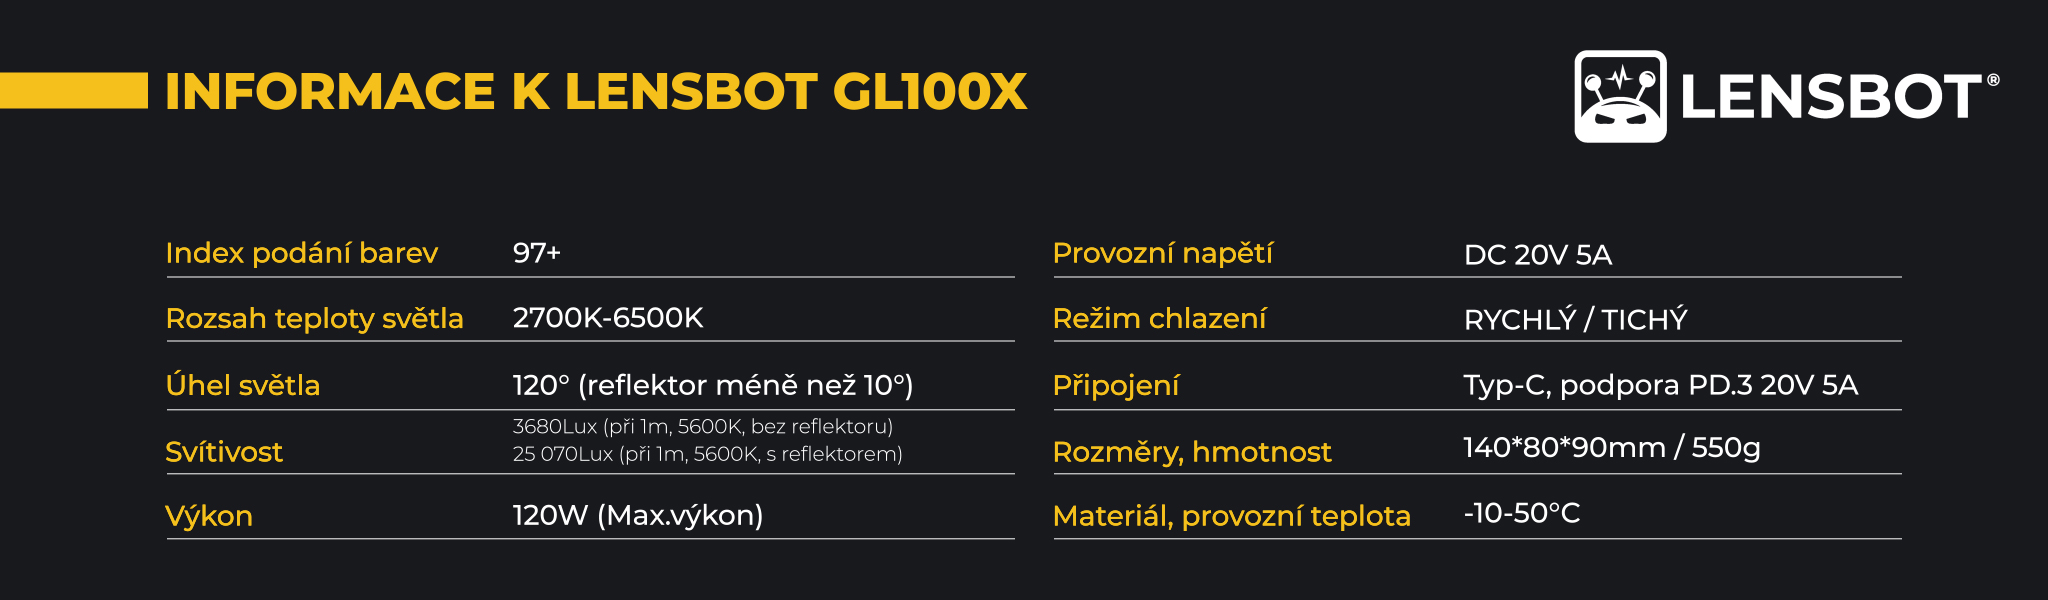 lensbot-gl100x-specifikace